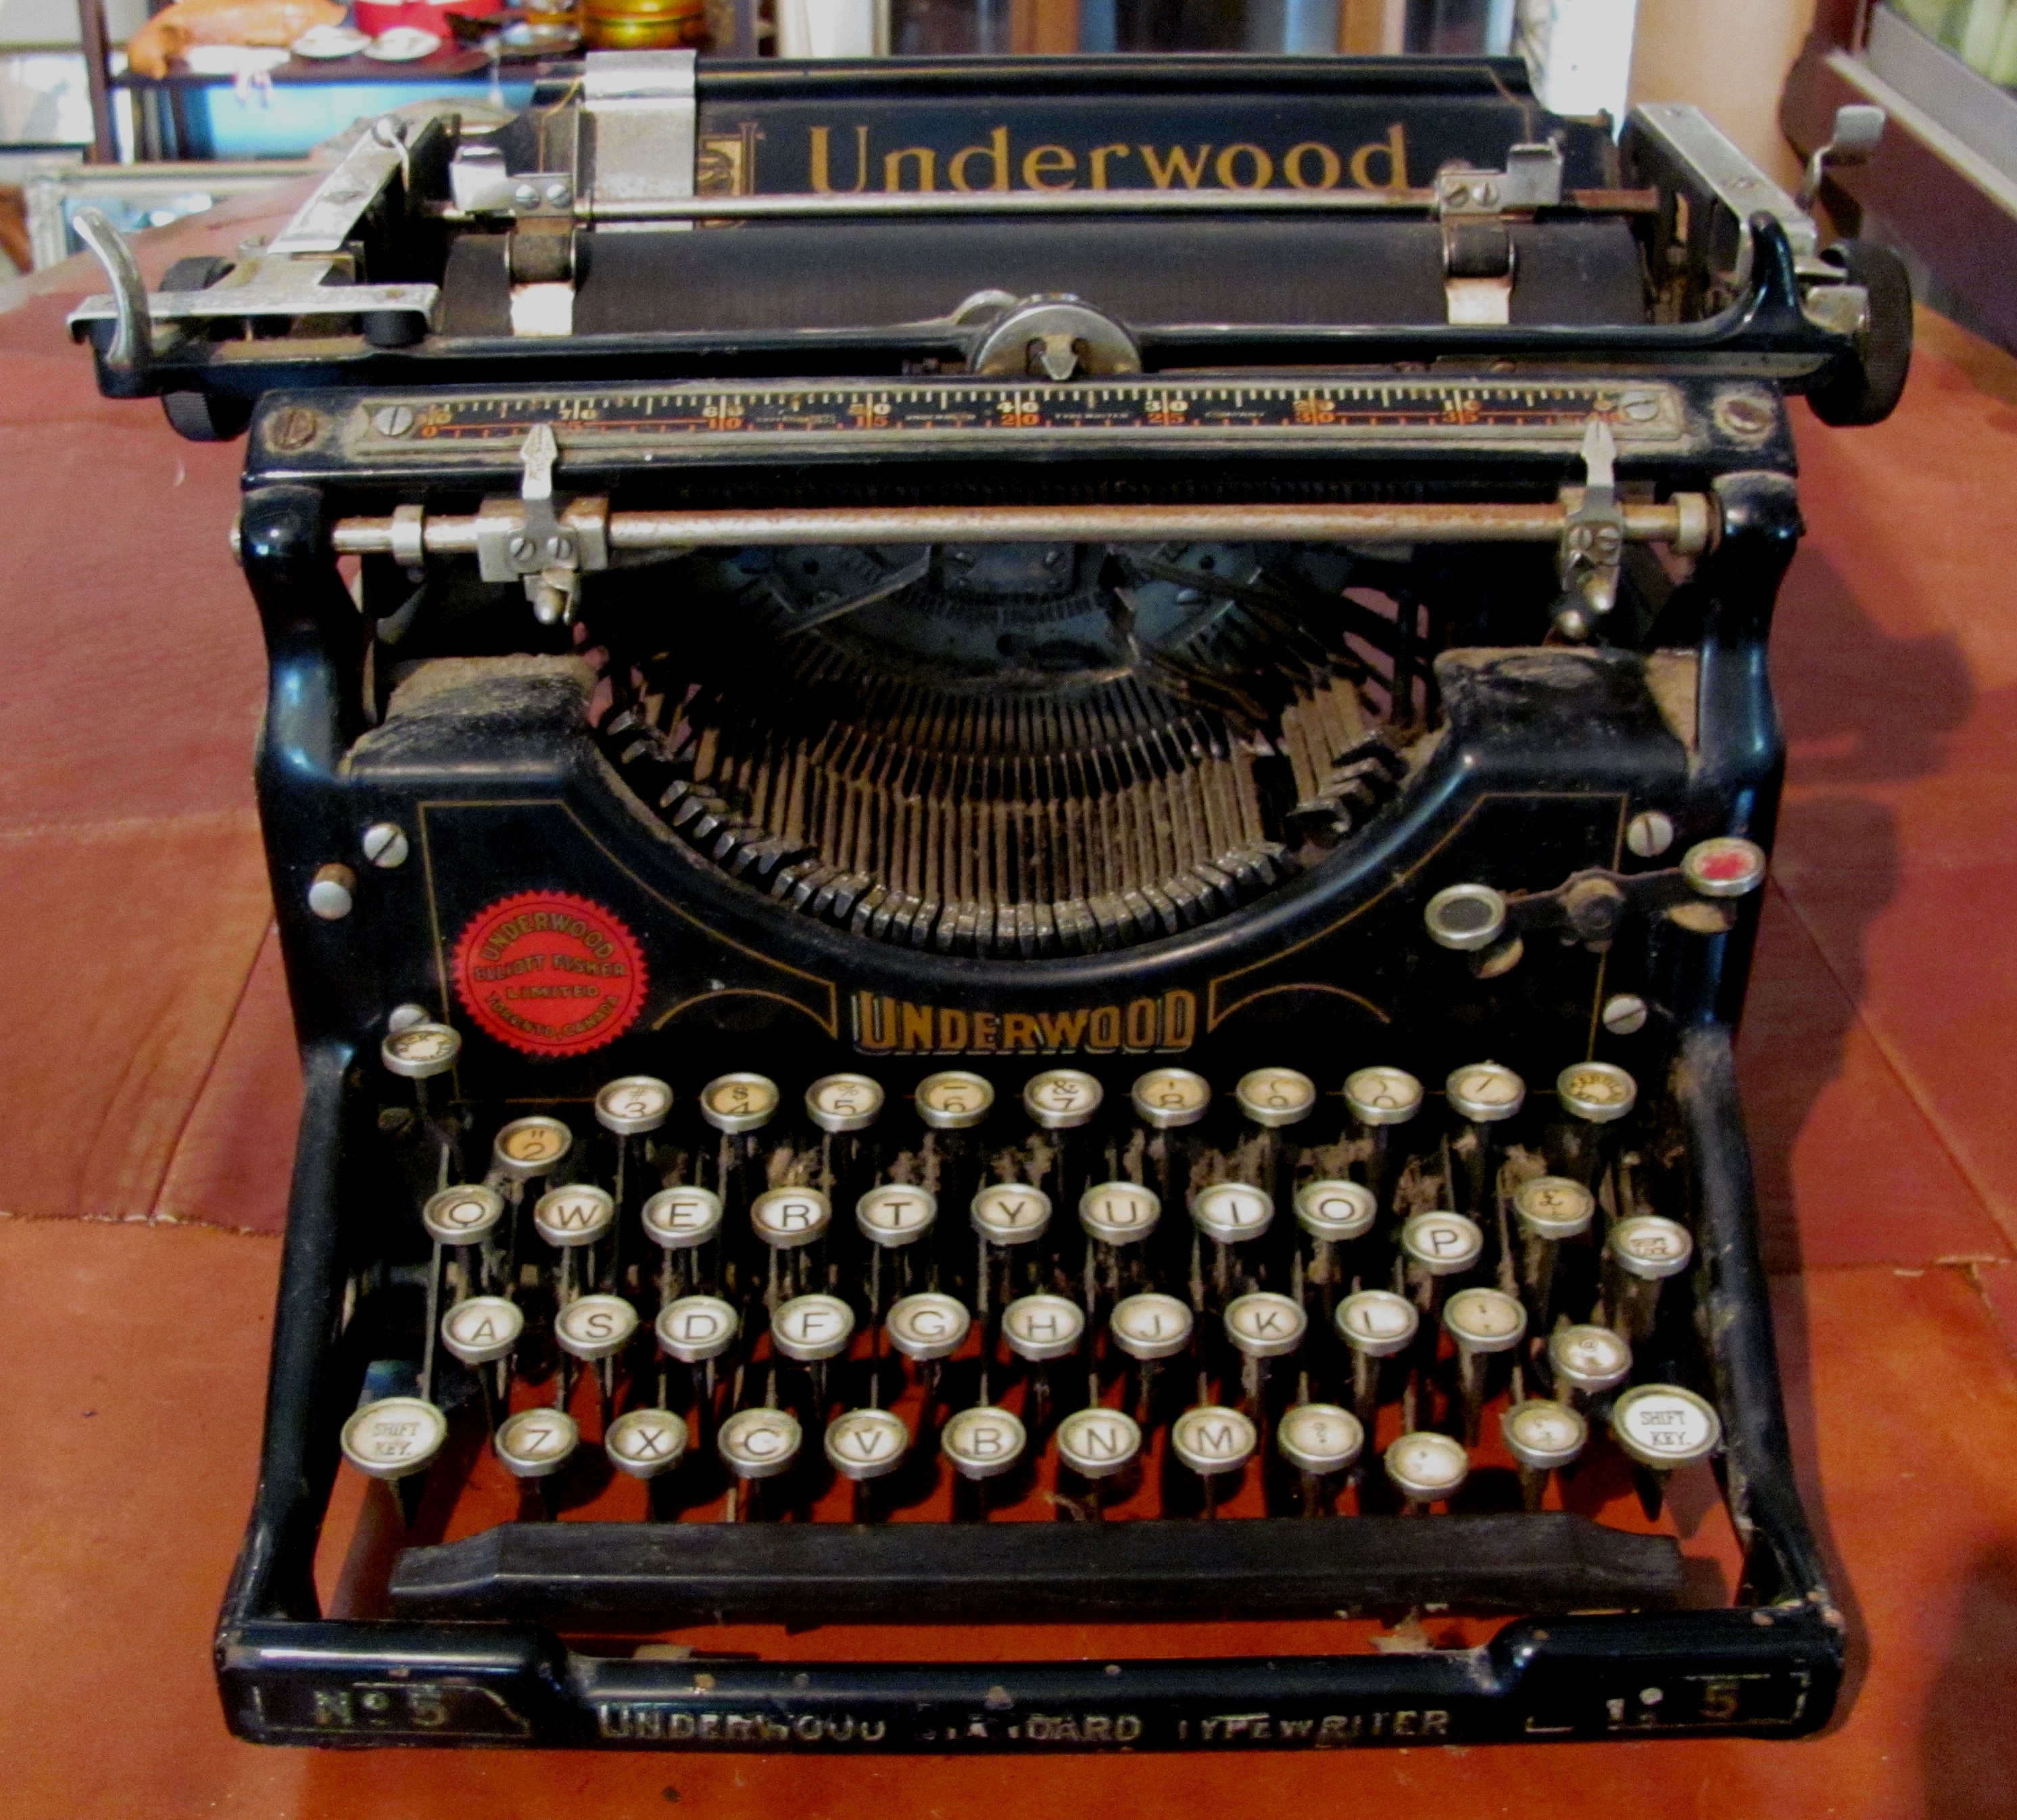 Vintage typewriter | Greencottagegallery's Blog